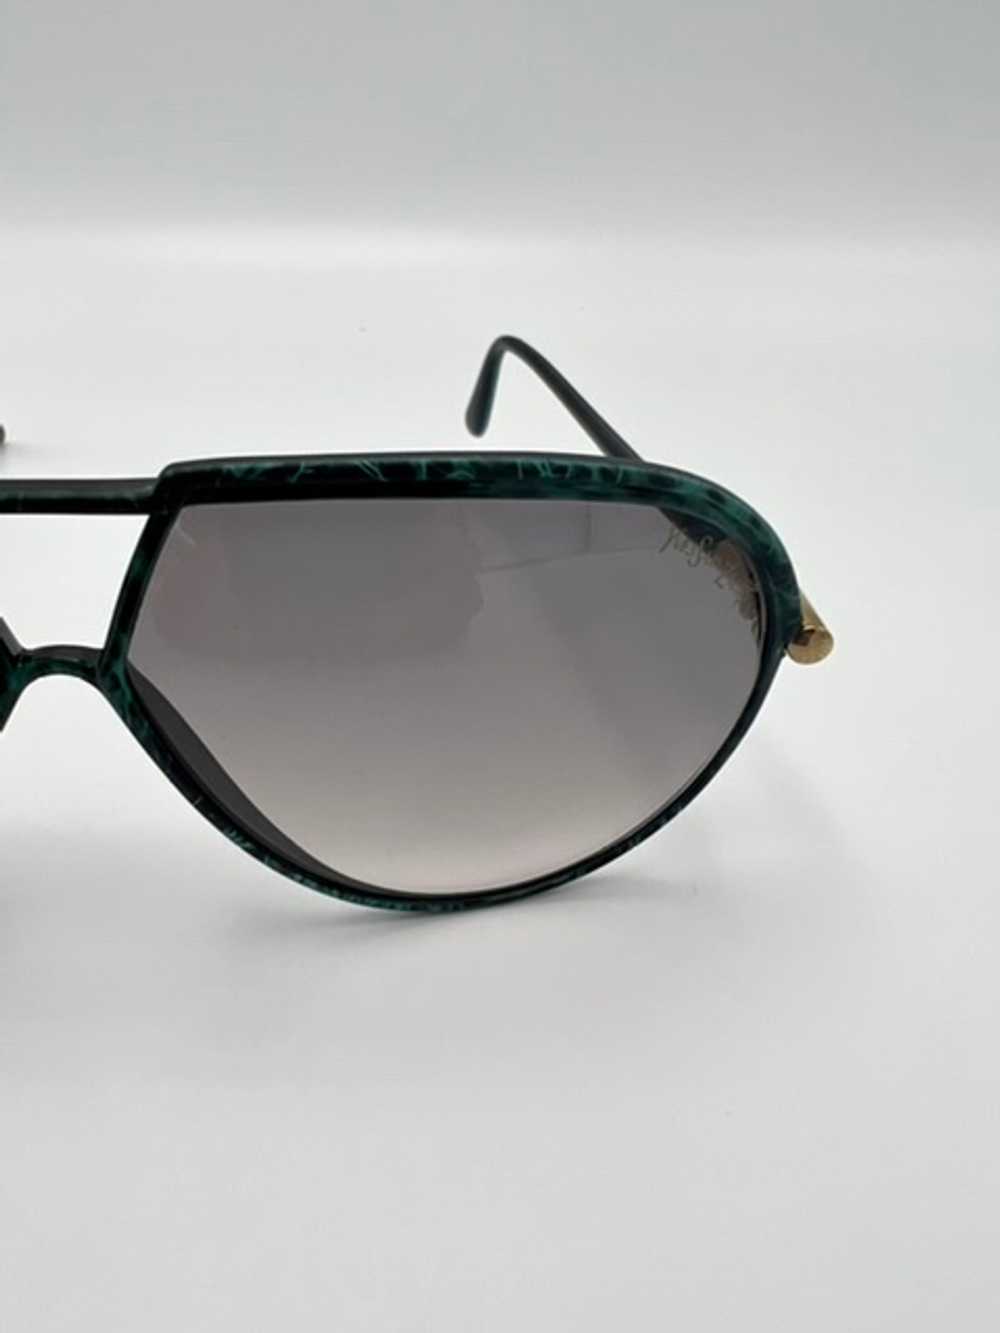 Yves Saint Laurent Coated Frame Aviator Sunglasses - image 6